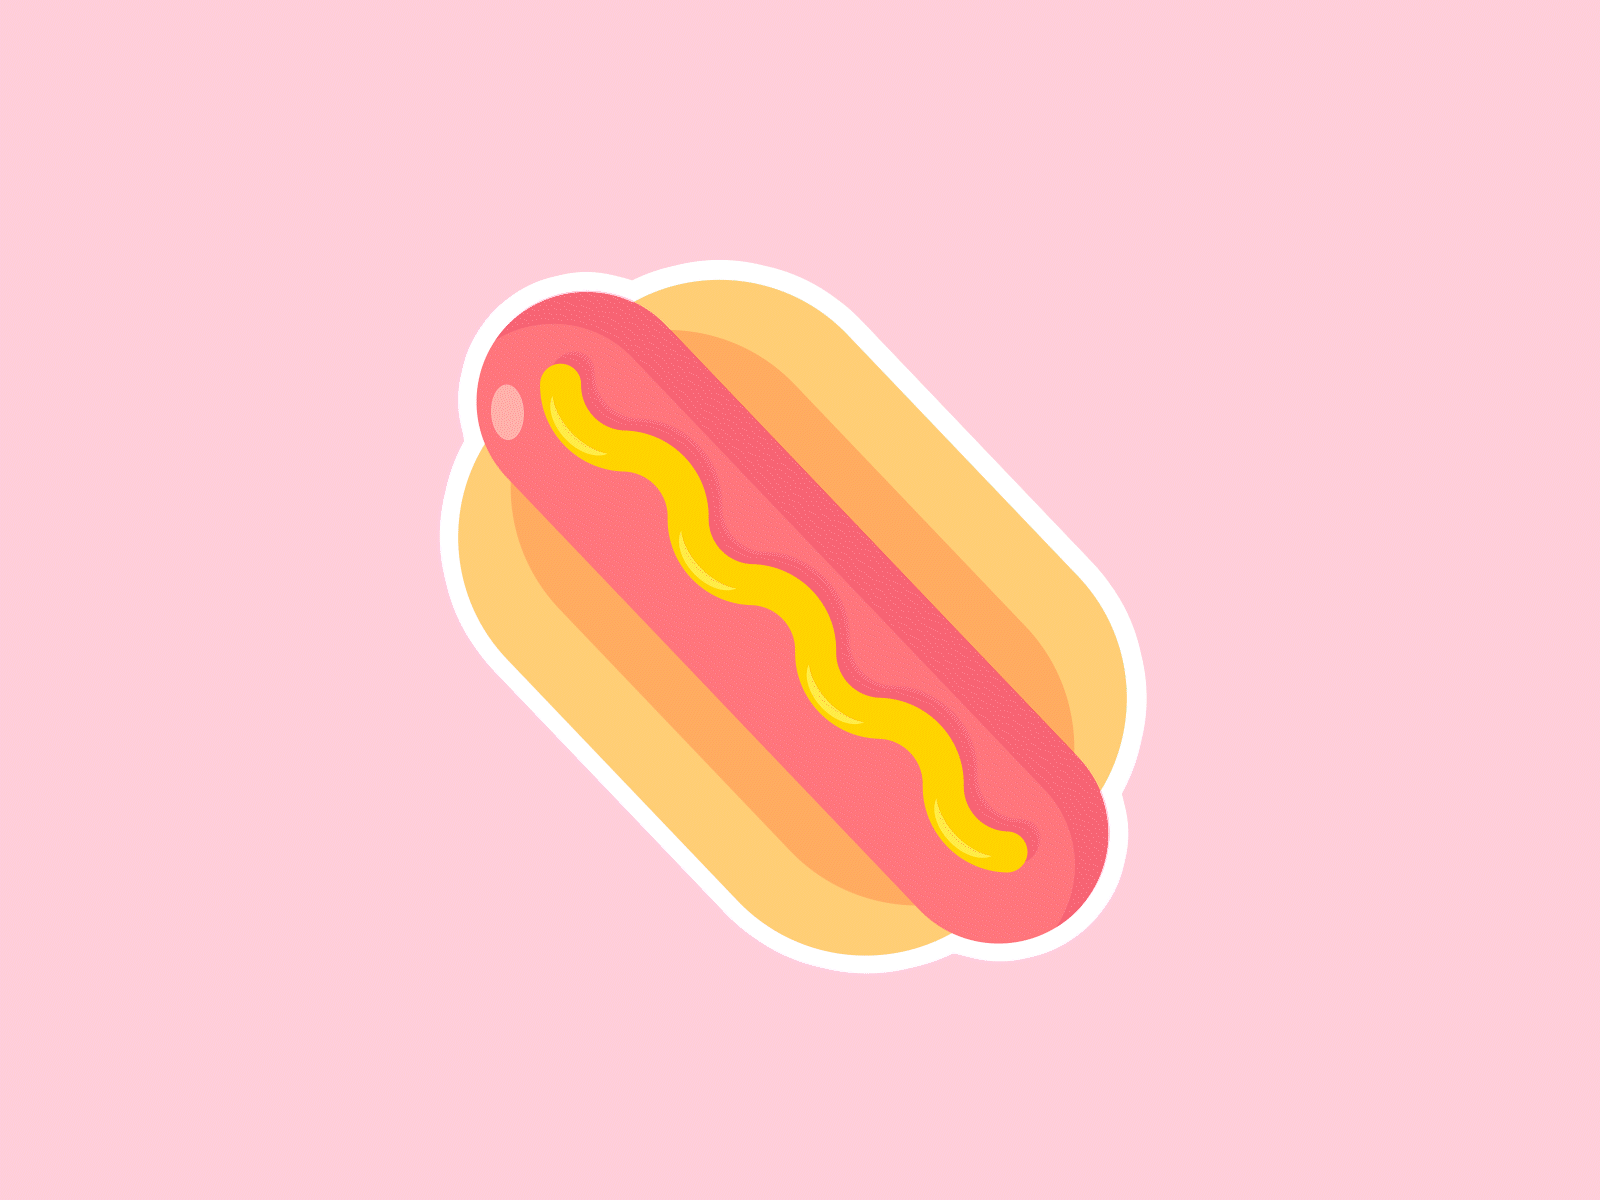 Veggie hotdog